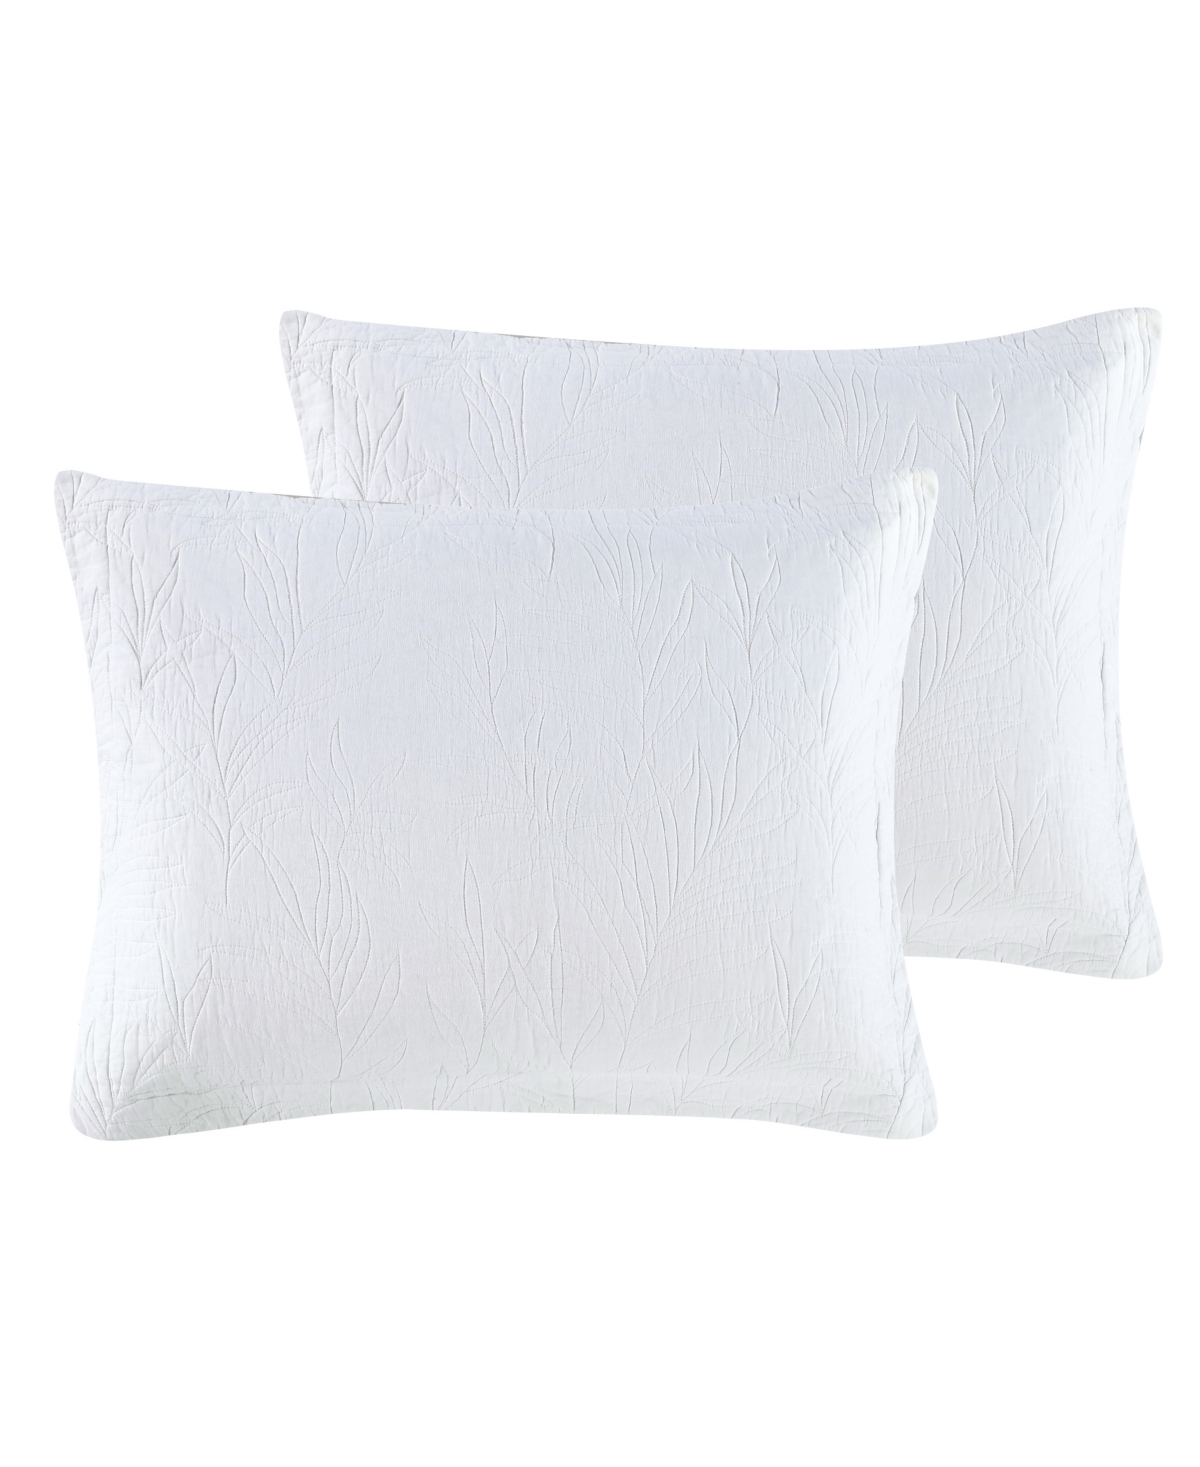 Tommy Bahama Solid Costa Sera Cotton Sham, Standard - White